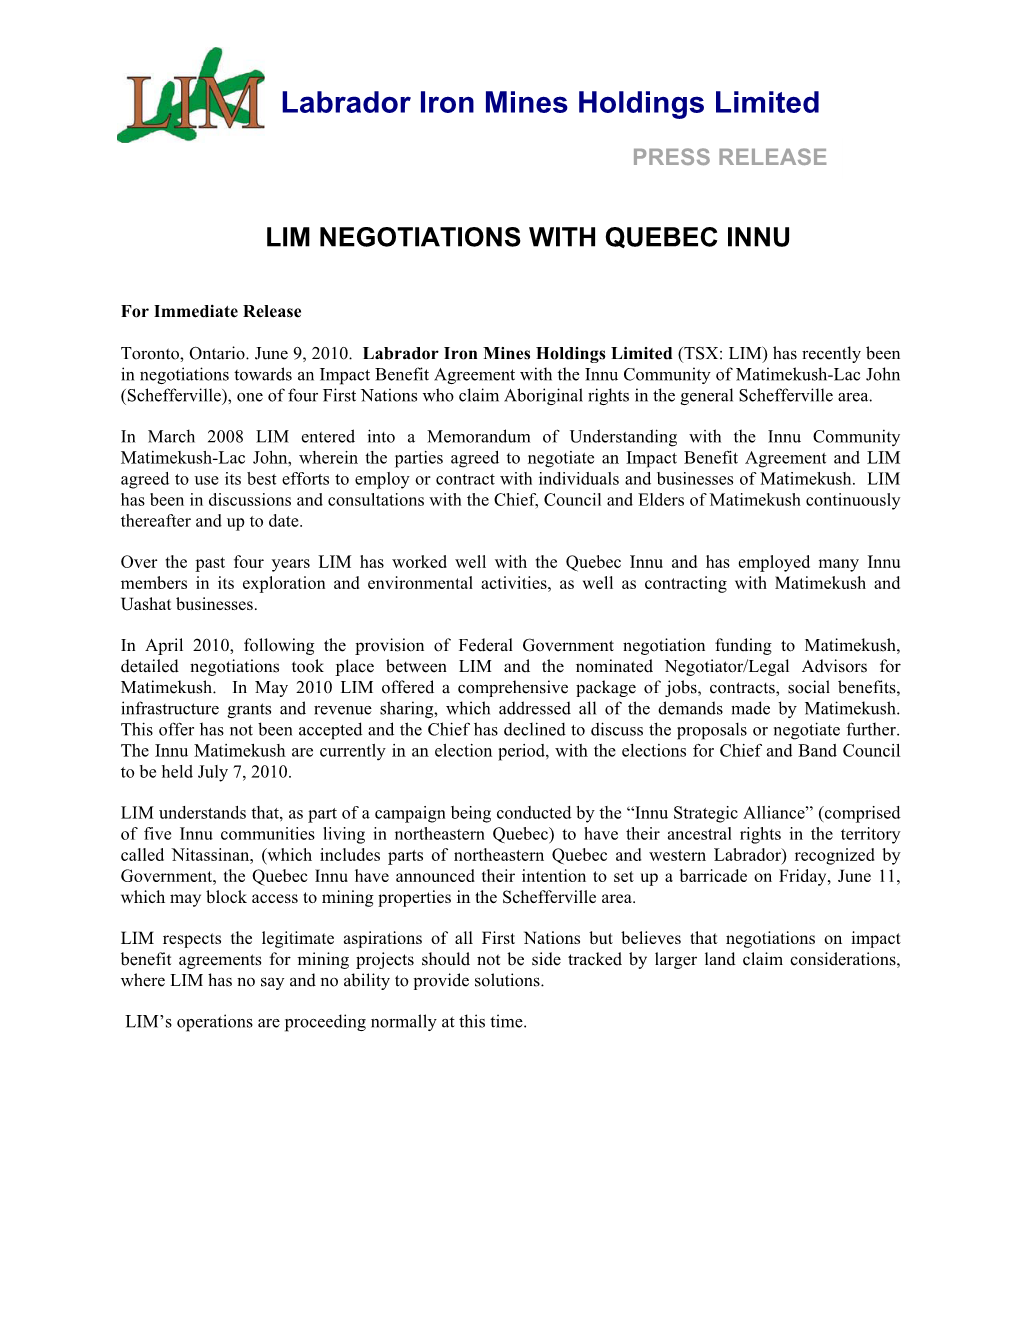 Lim Negotiations with Quebec Innu